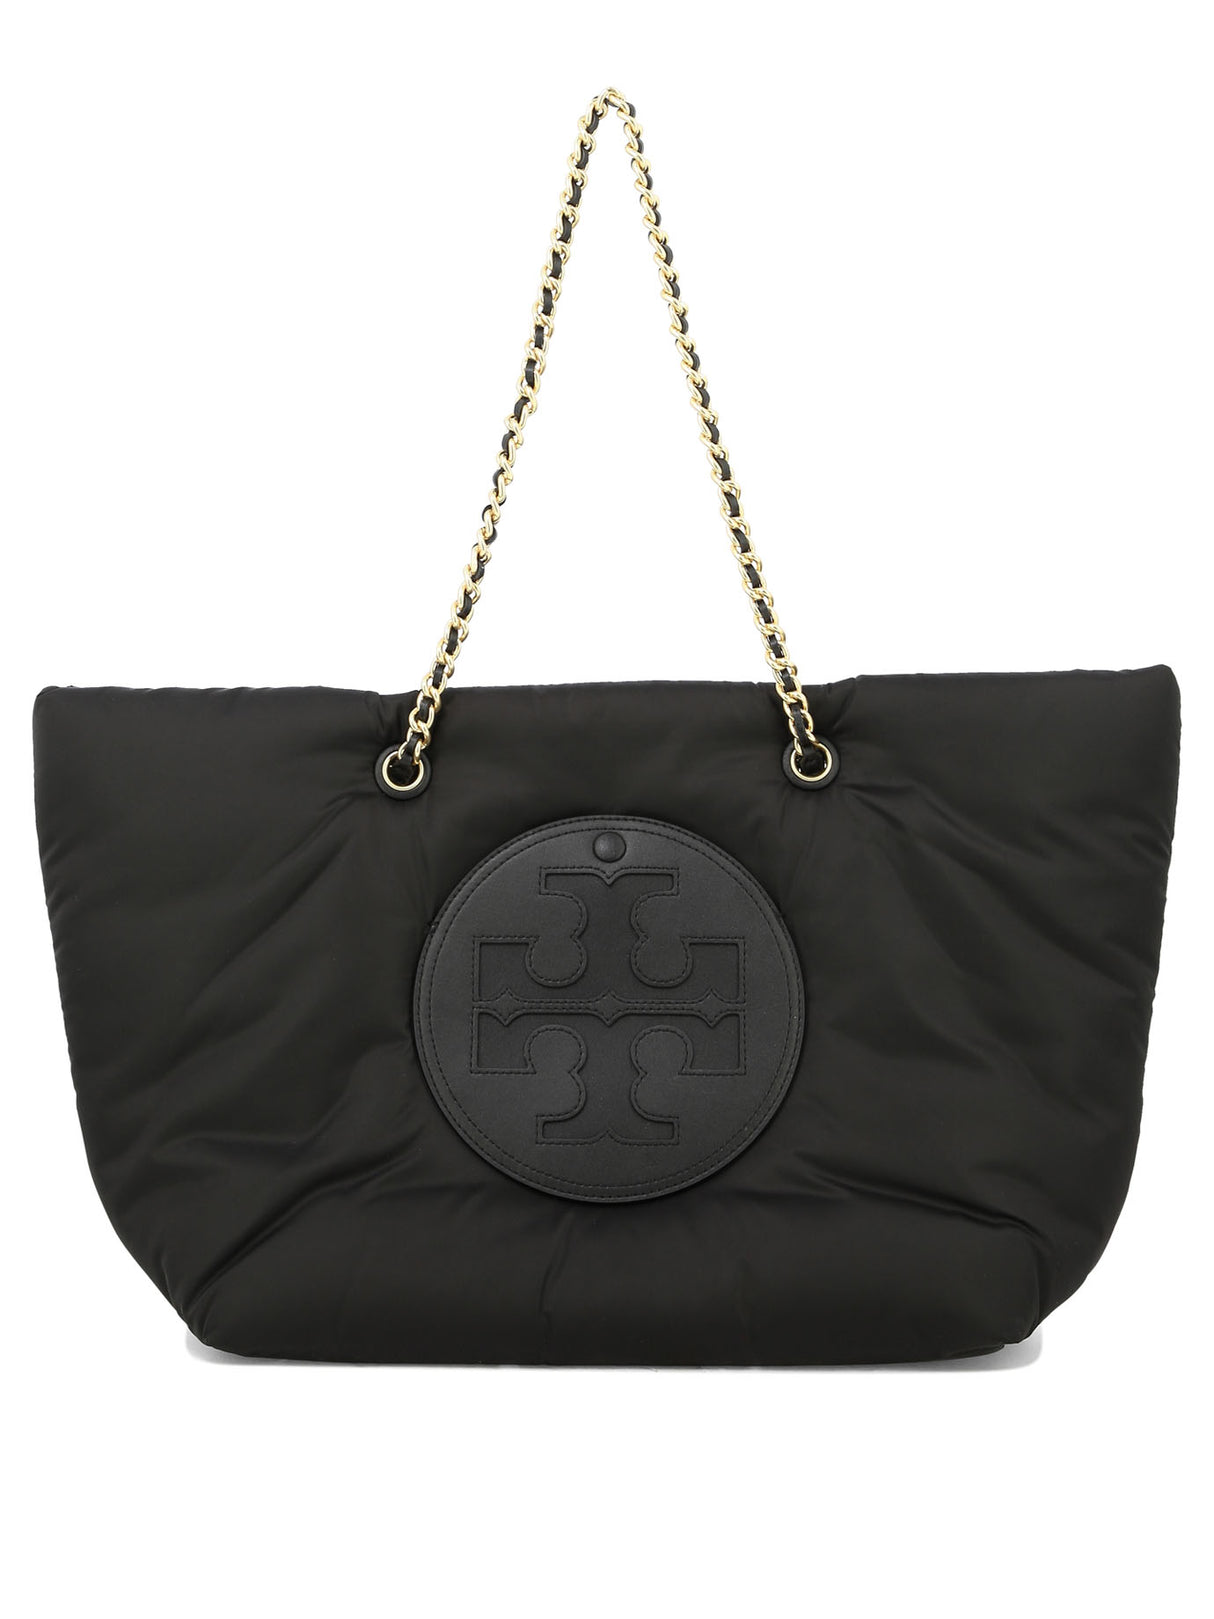 TORY BURCH Stylish Black Padded Tote Handbag for Women